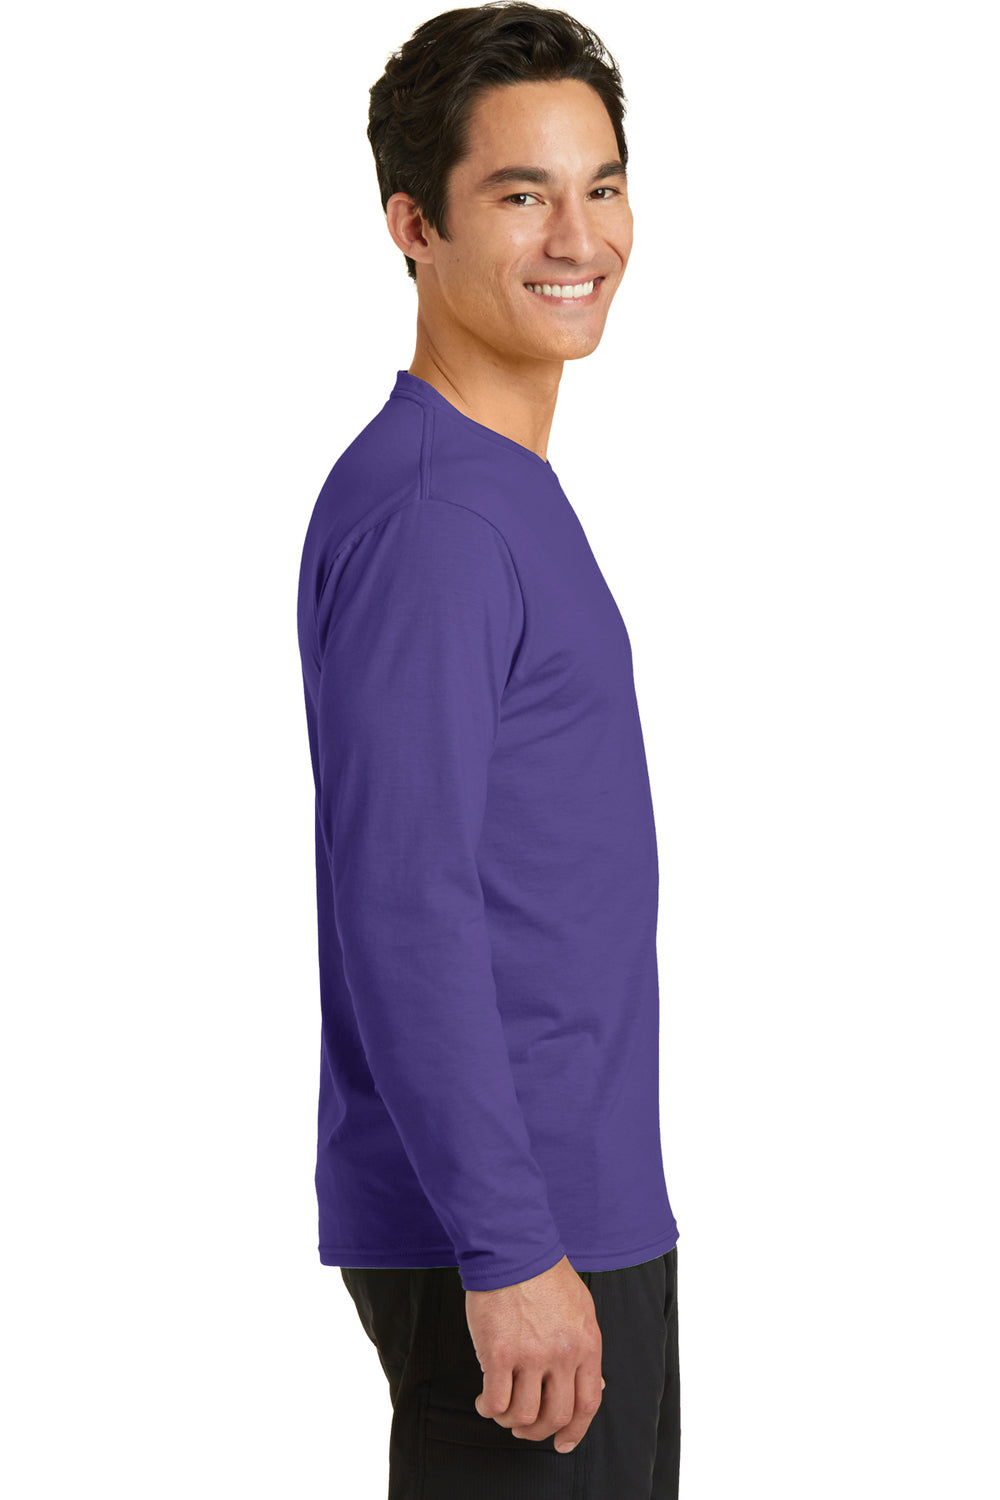 Port & Company PC381LS Mens Dry Zone Performance Moisture Wicking Long Sleeve Crewneck T-Shirt Purple Side